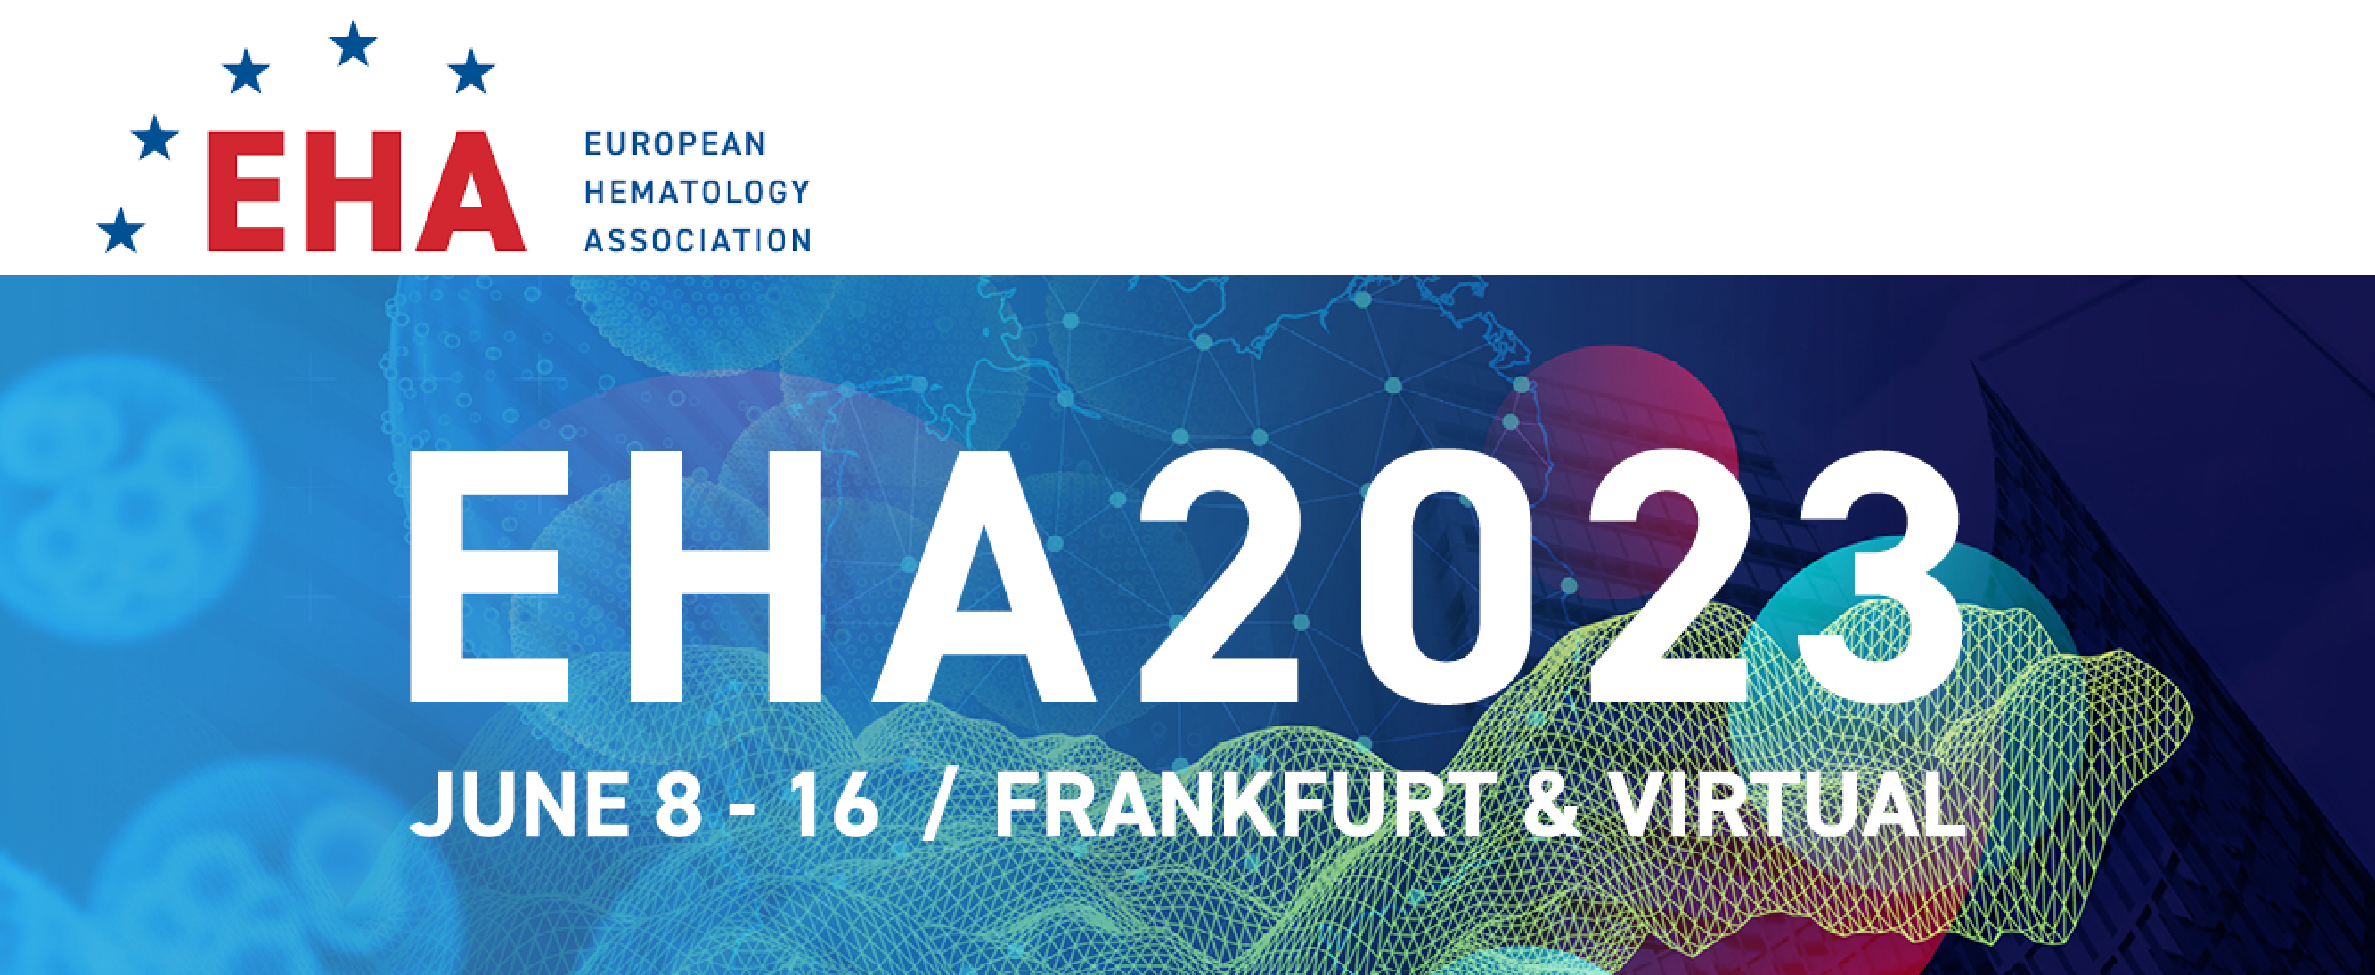 Medflixs The European Hematology Association 27th congress EHA 2022